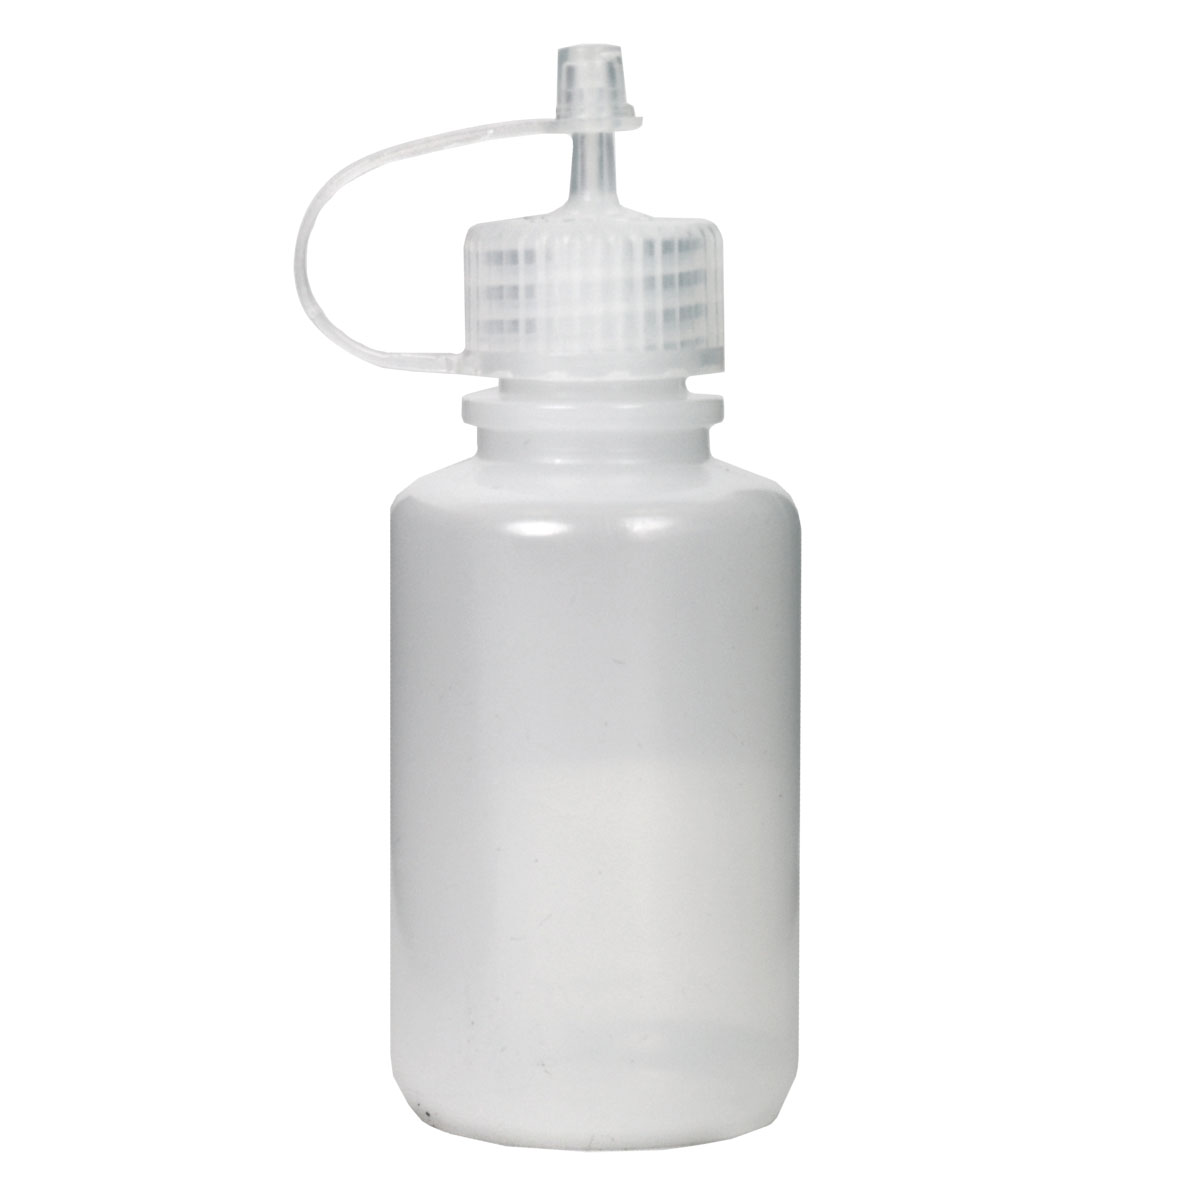 Productfoto van Nalgene Dispenser-Fles - 60ml - empty bottle